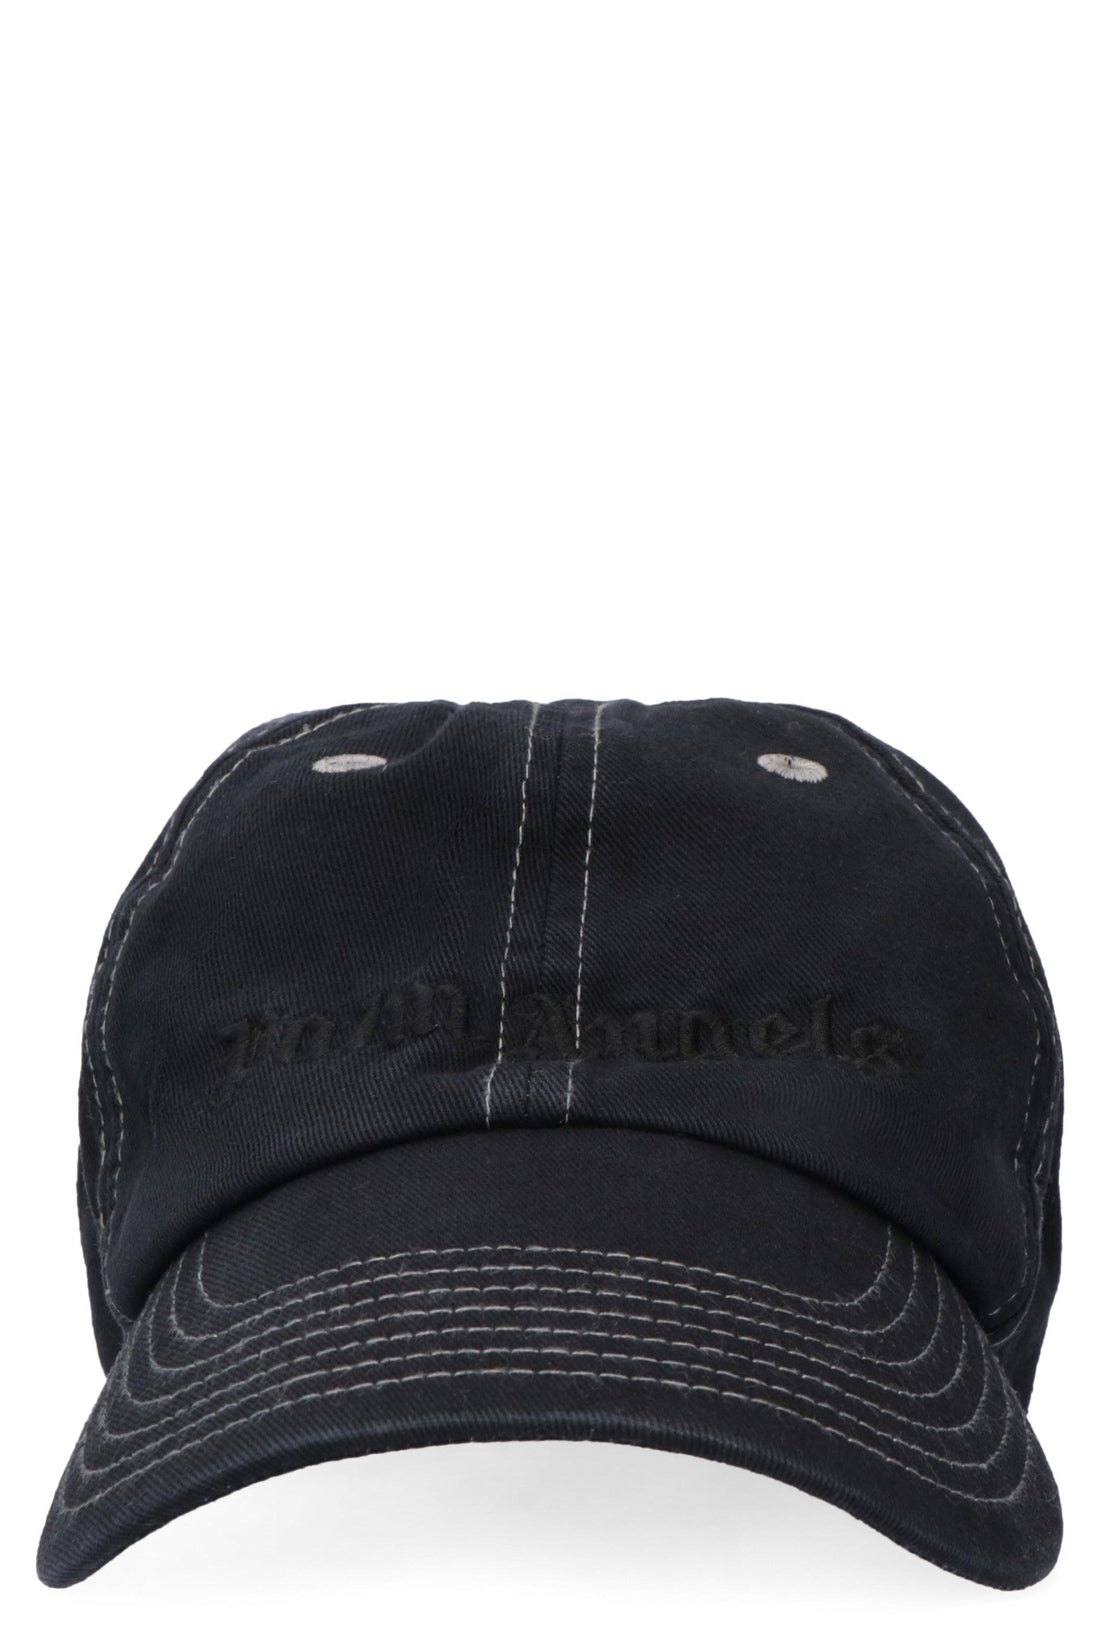 Palm Angels-OUTLET-SALE-Printed baseball cap-ARCHIVIST